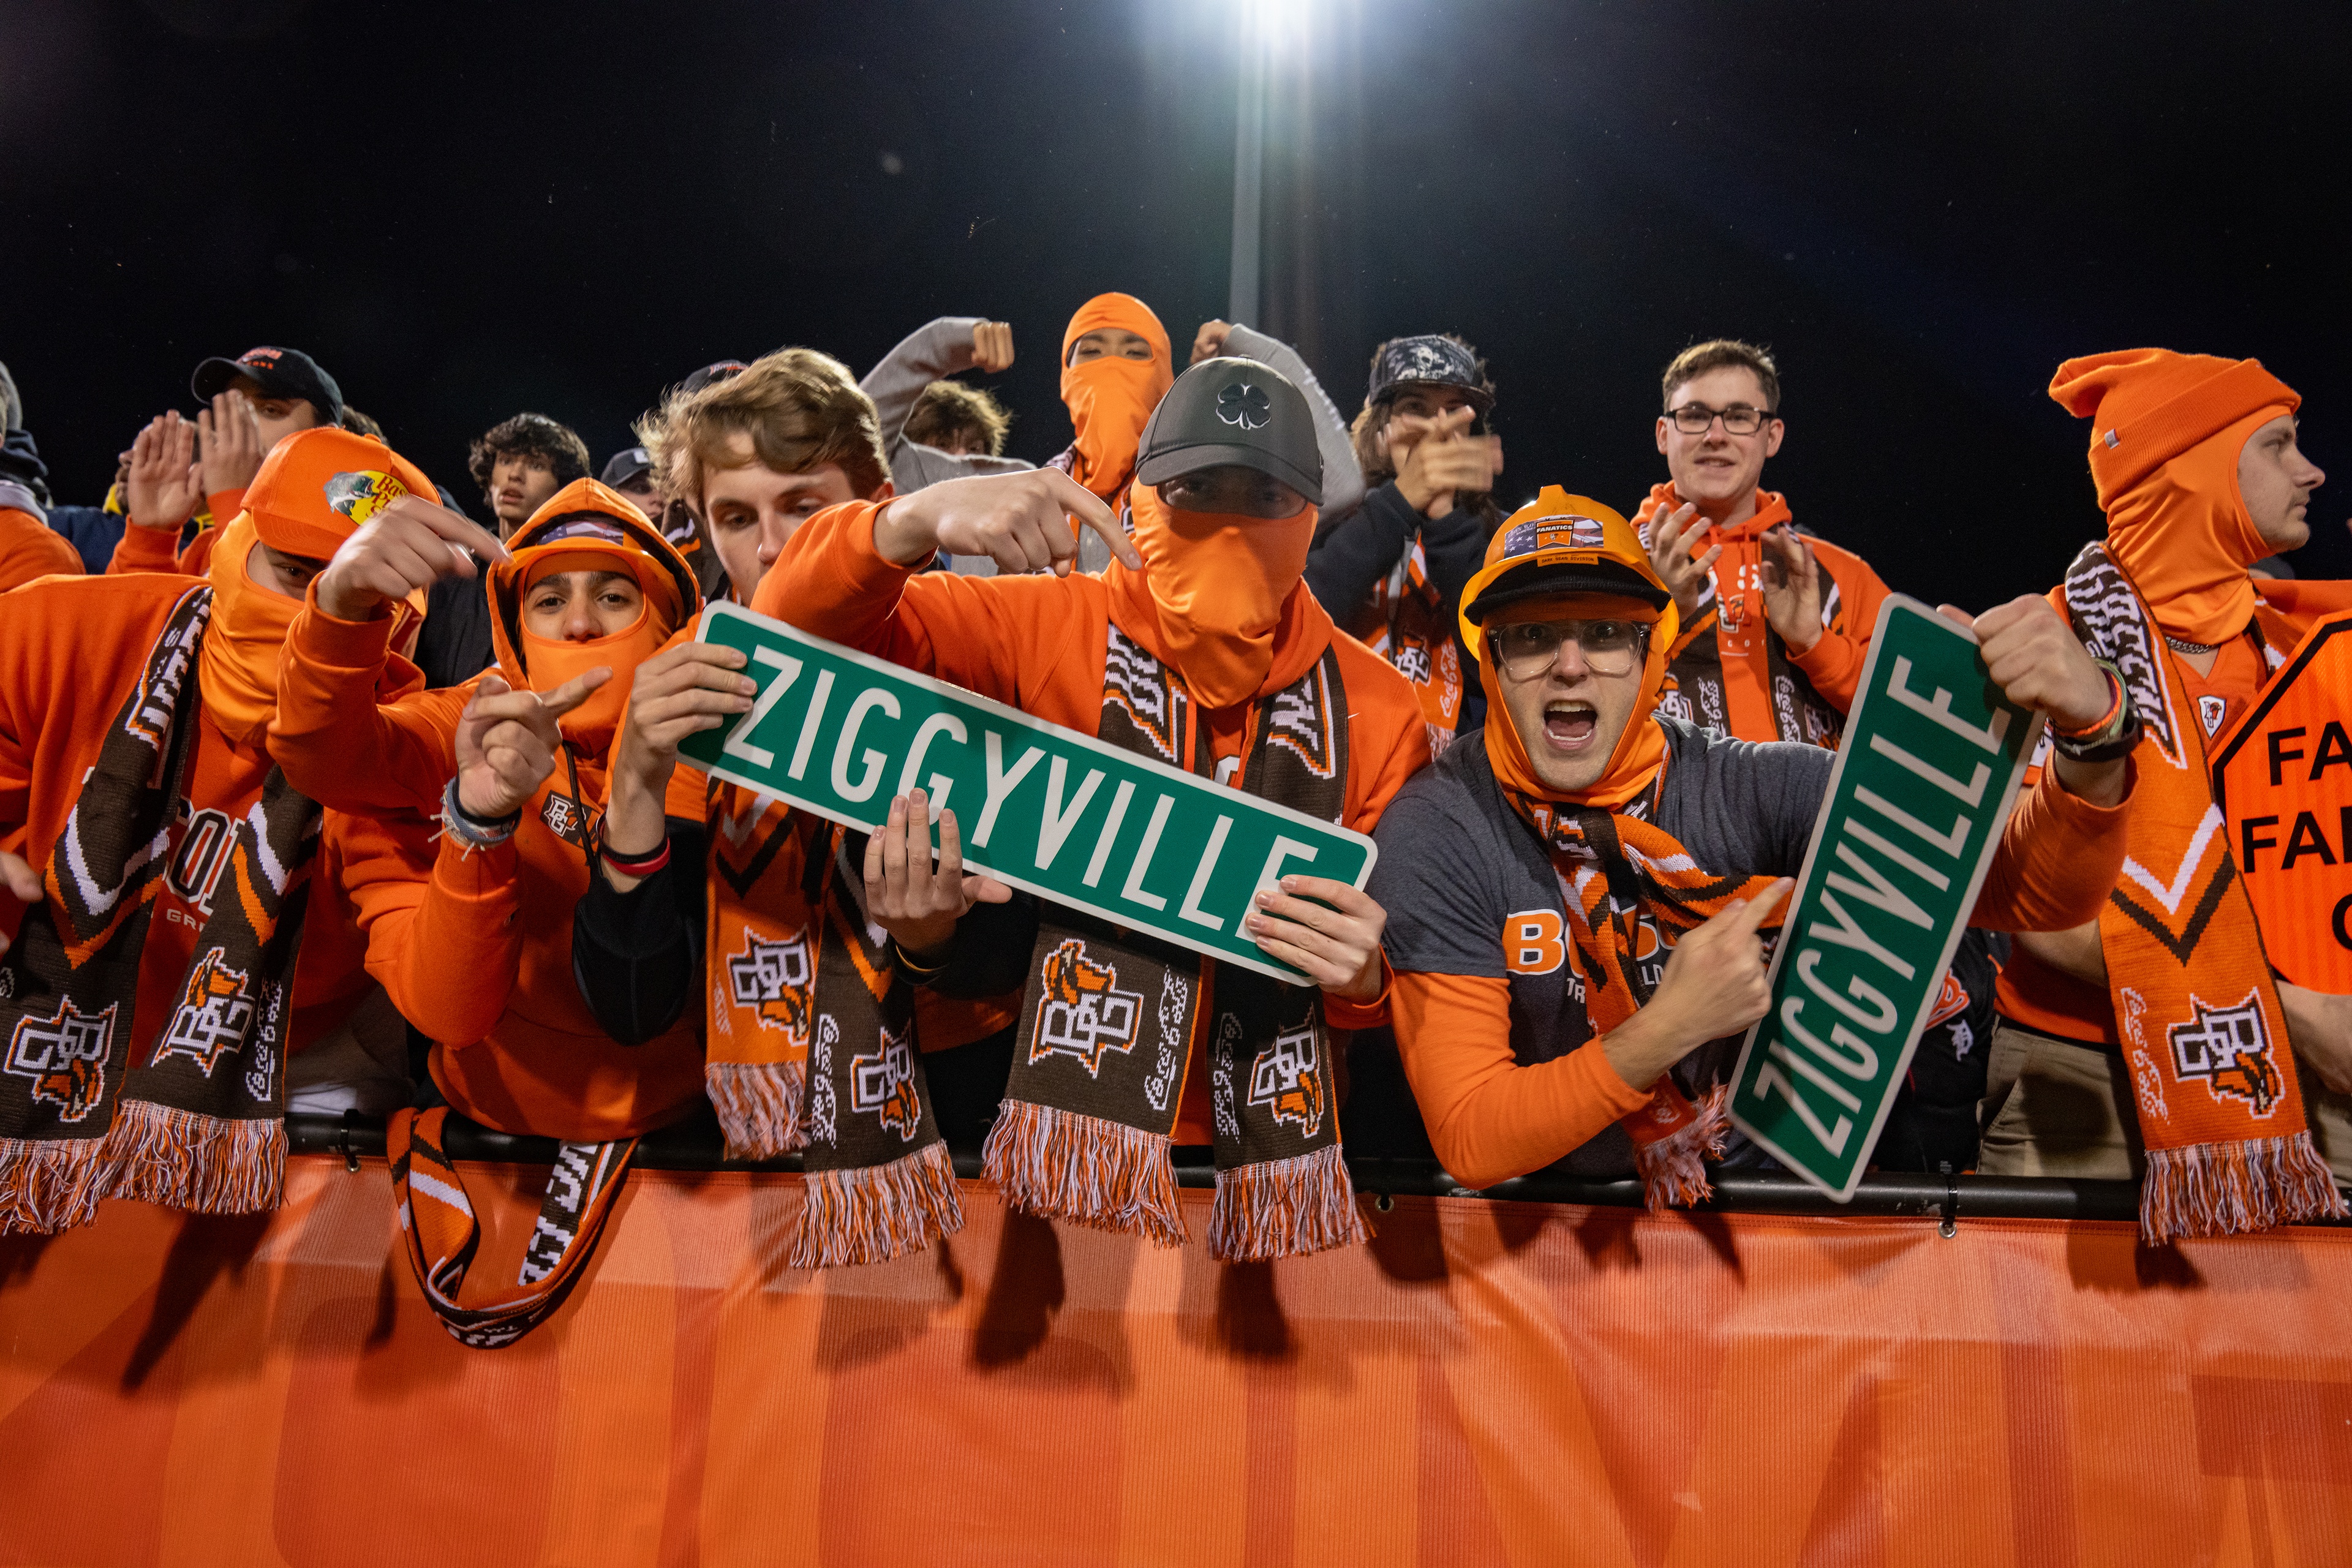 BGSU football fans wearing orange hold up Ziggyville signs